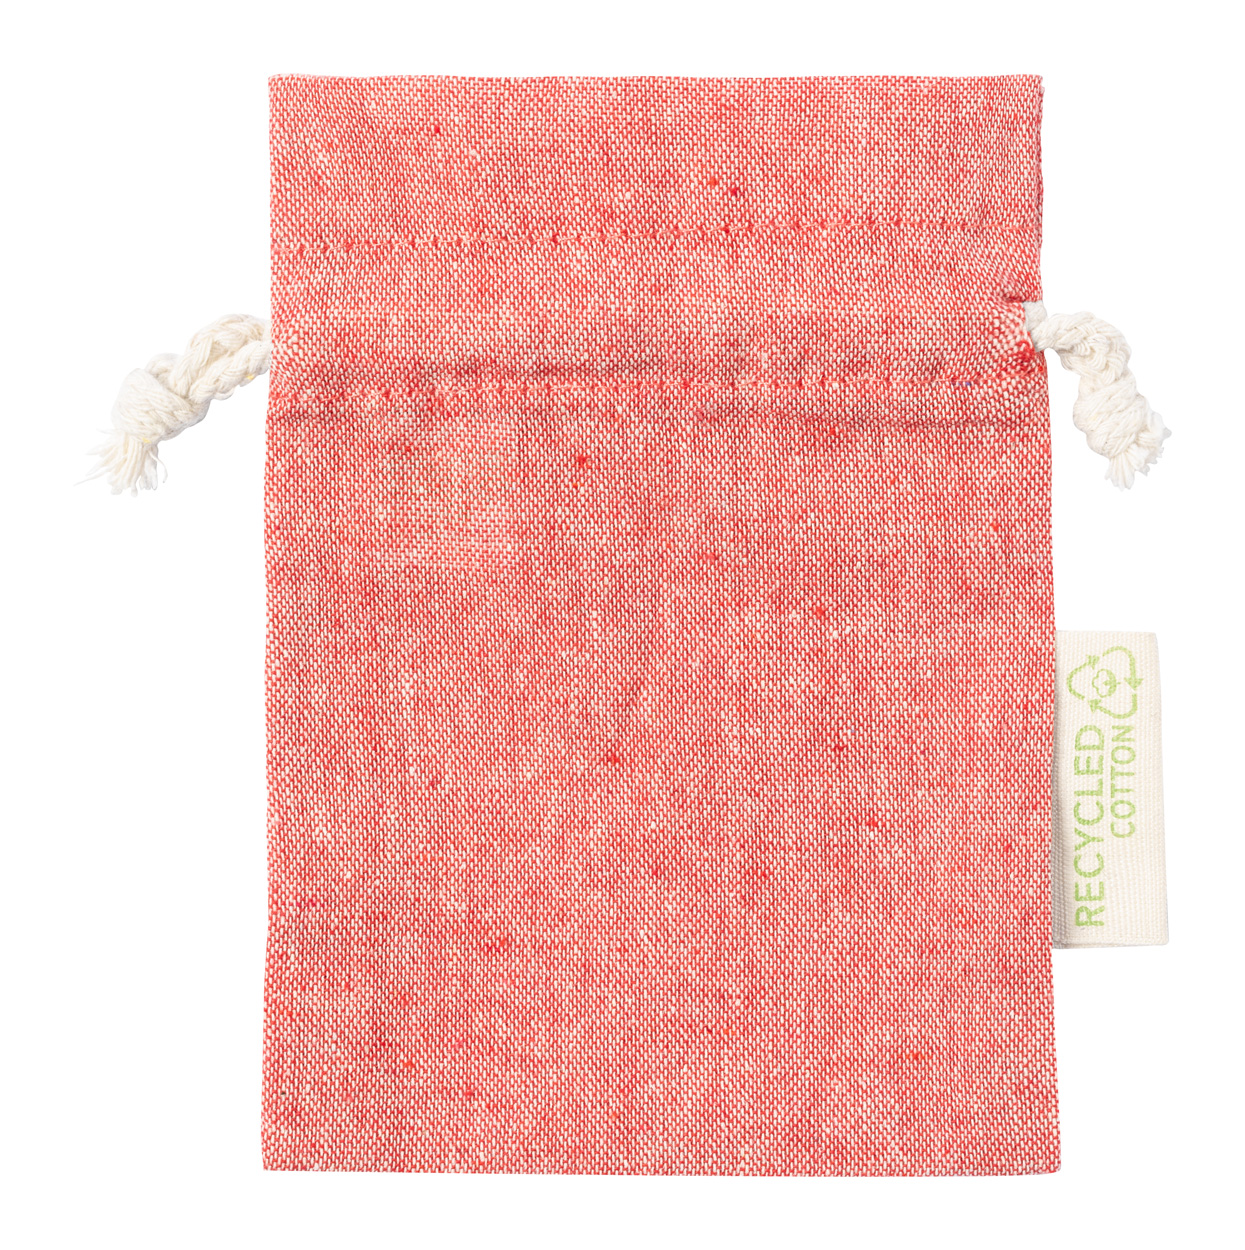 Dratinix cotton gift bag - red